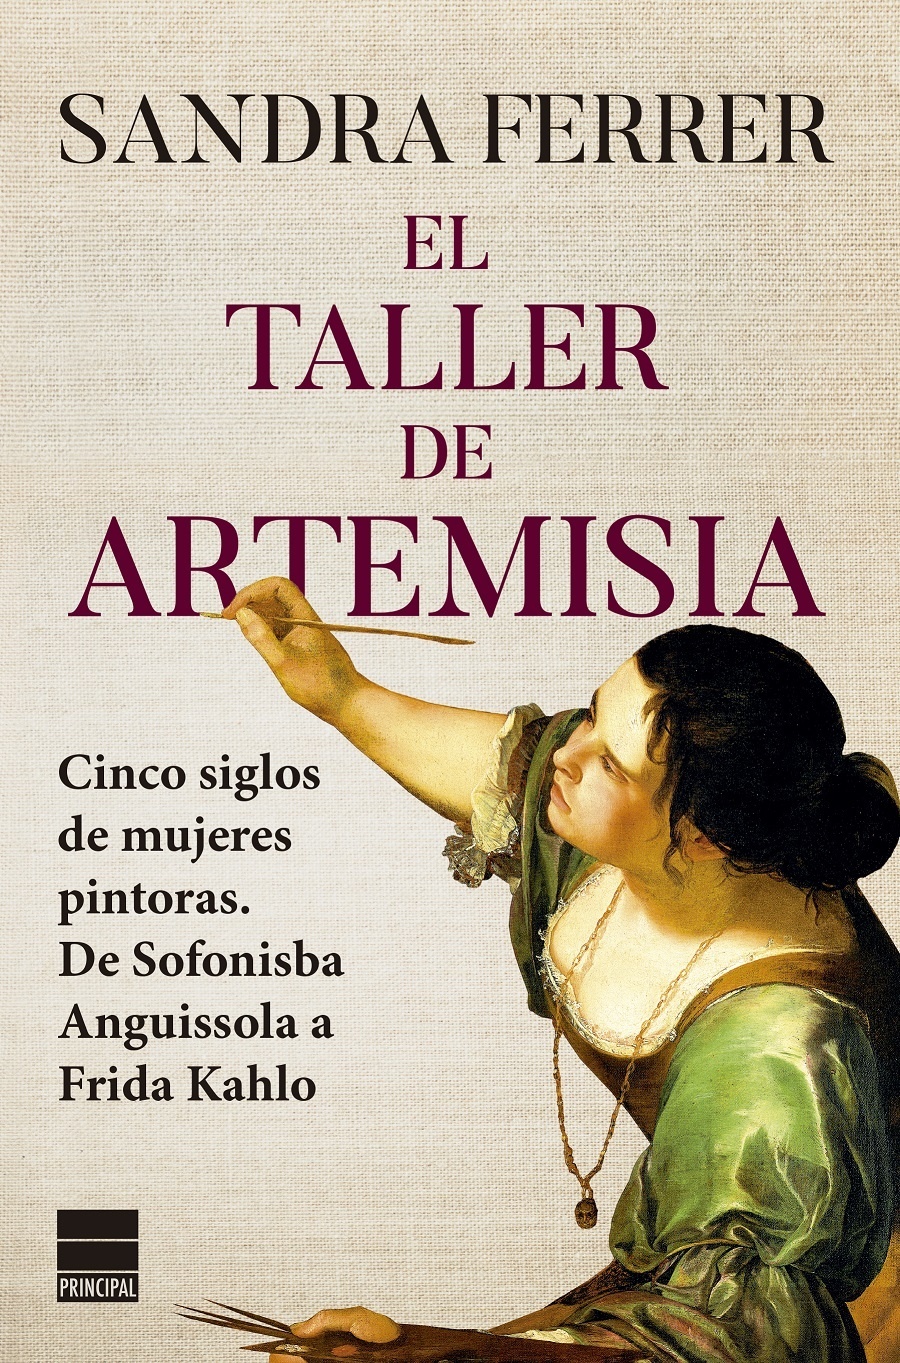 Taller de Artemisia, El "Cinco siglos de mujeres pintoras. De Sofonisba Anguissola a Frida Kahlo"